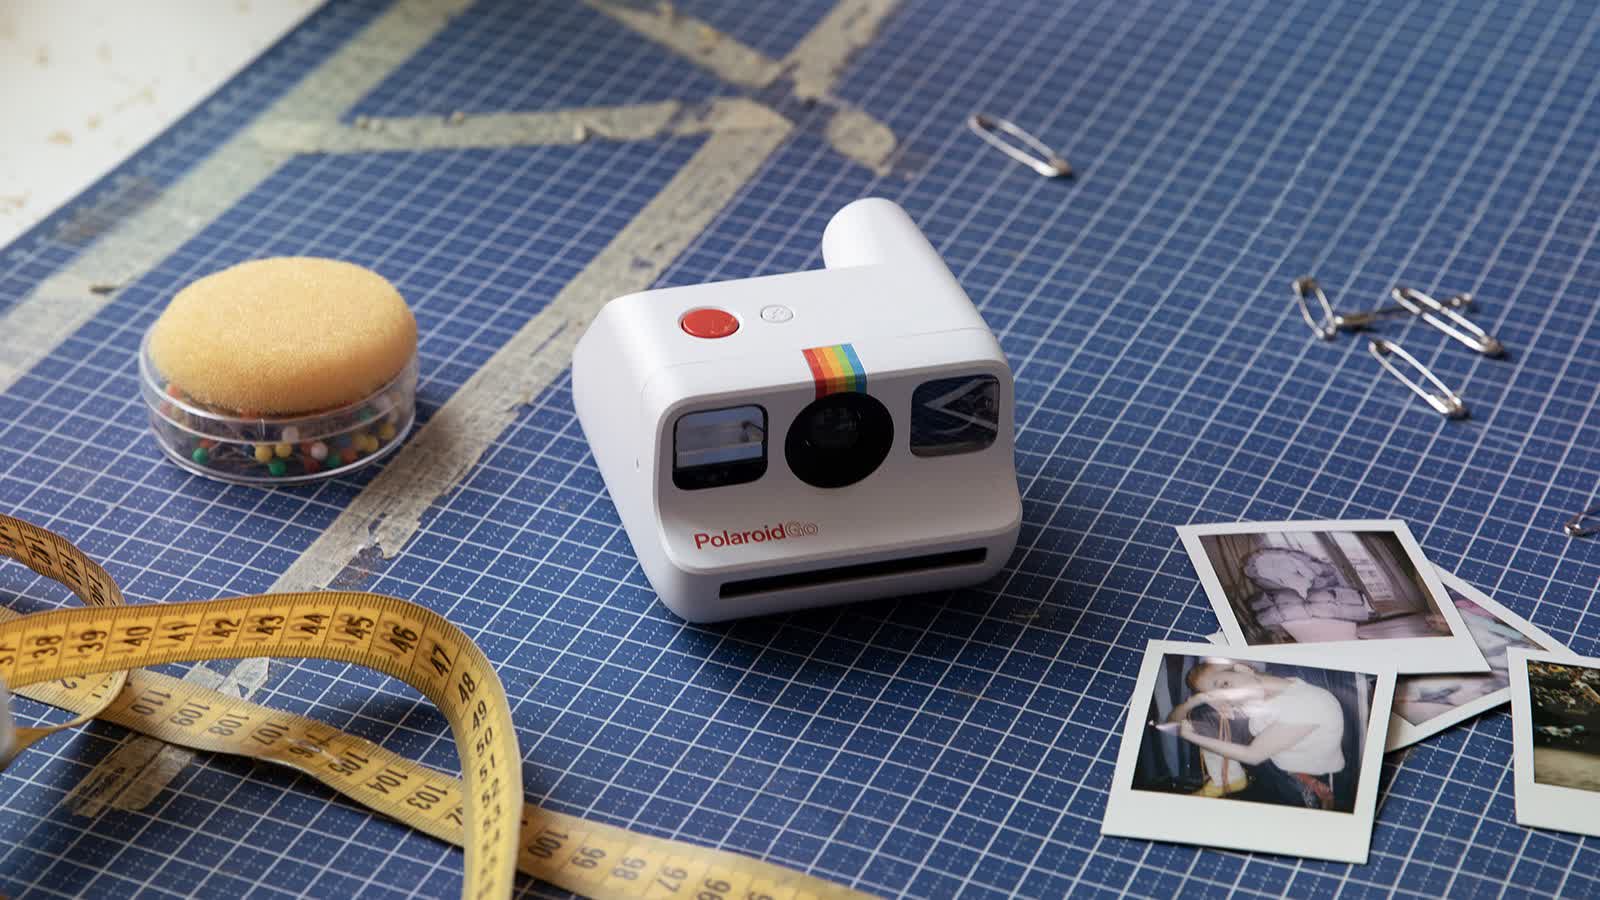 Polaroid announces its smallest-ever analog instant camera